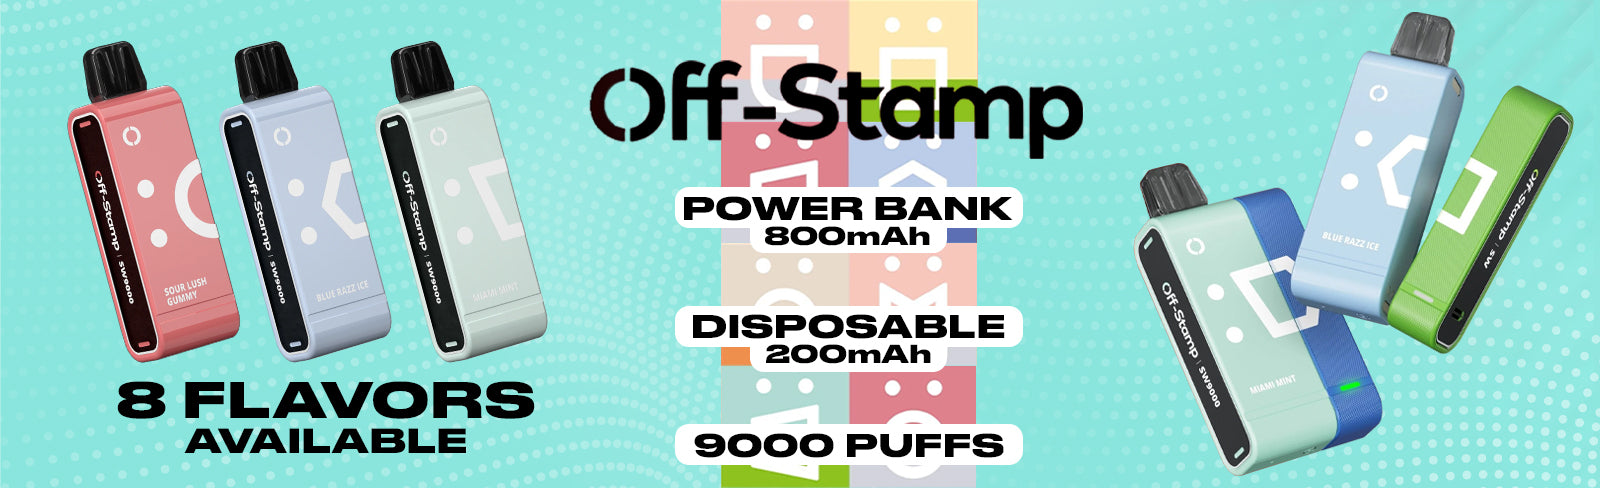 Off-stamp-banner-southeastvape